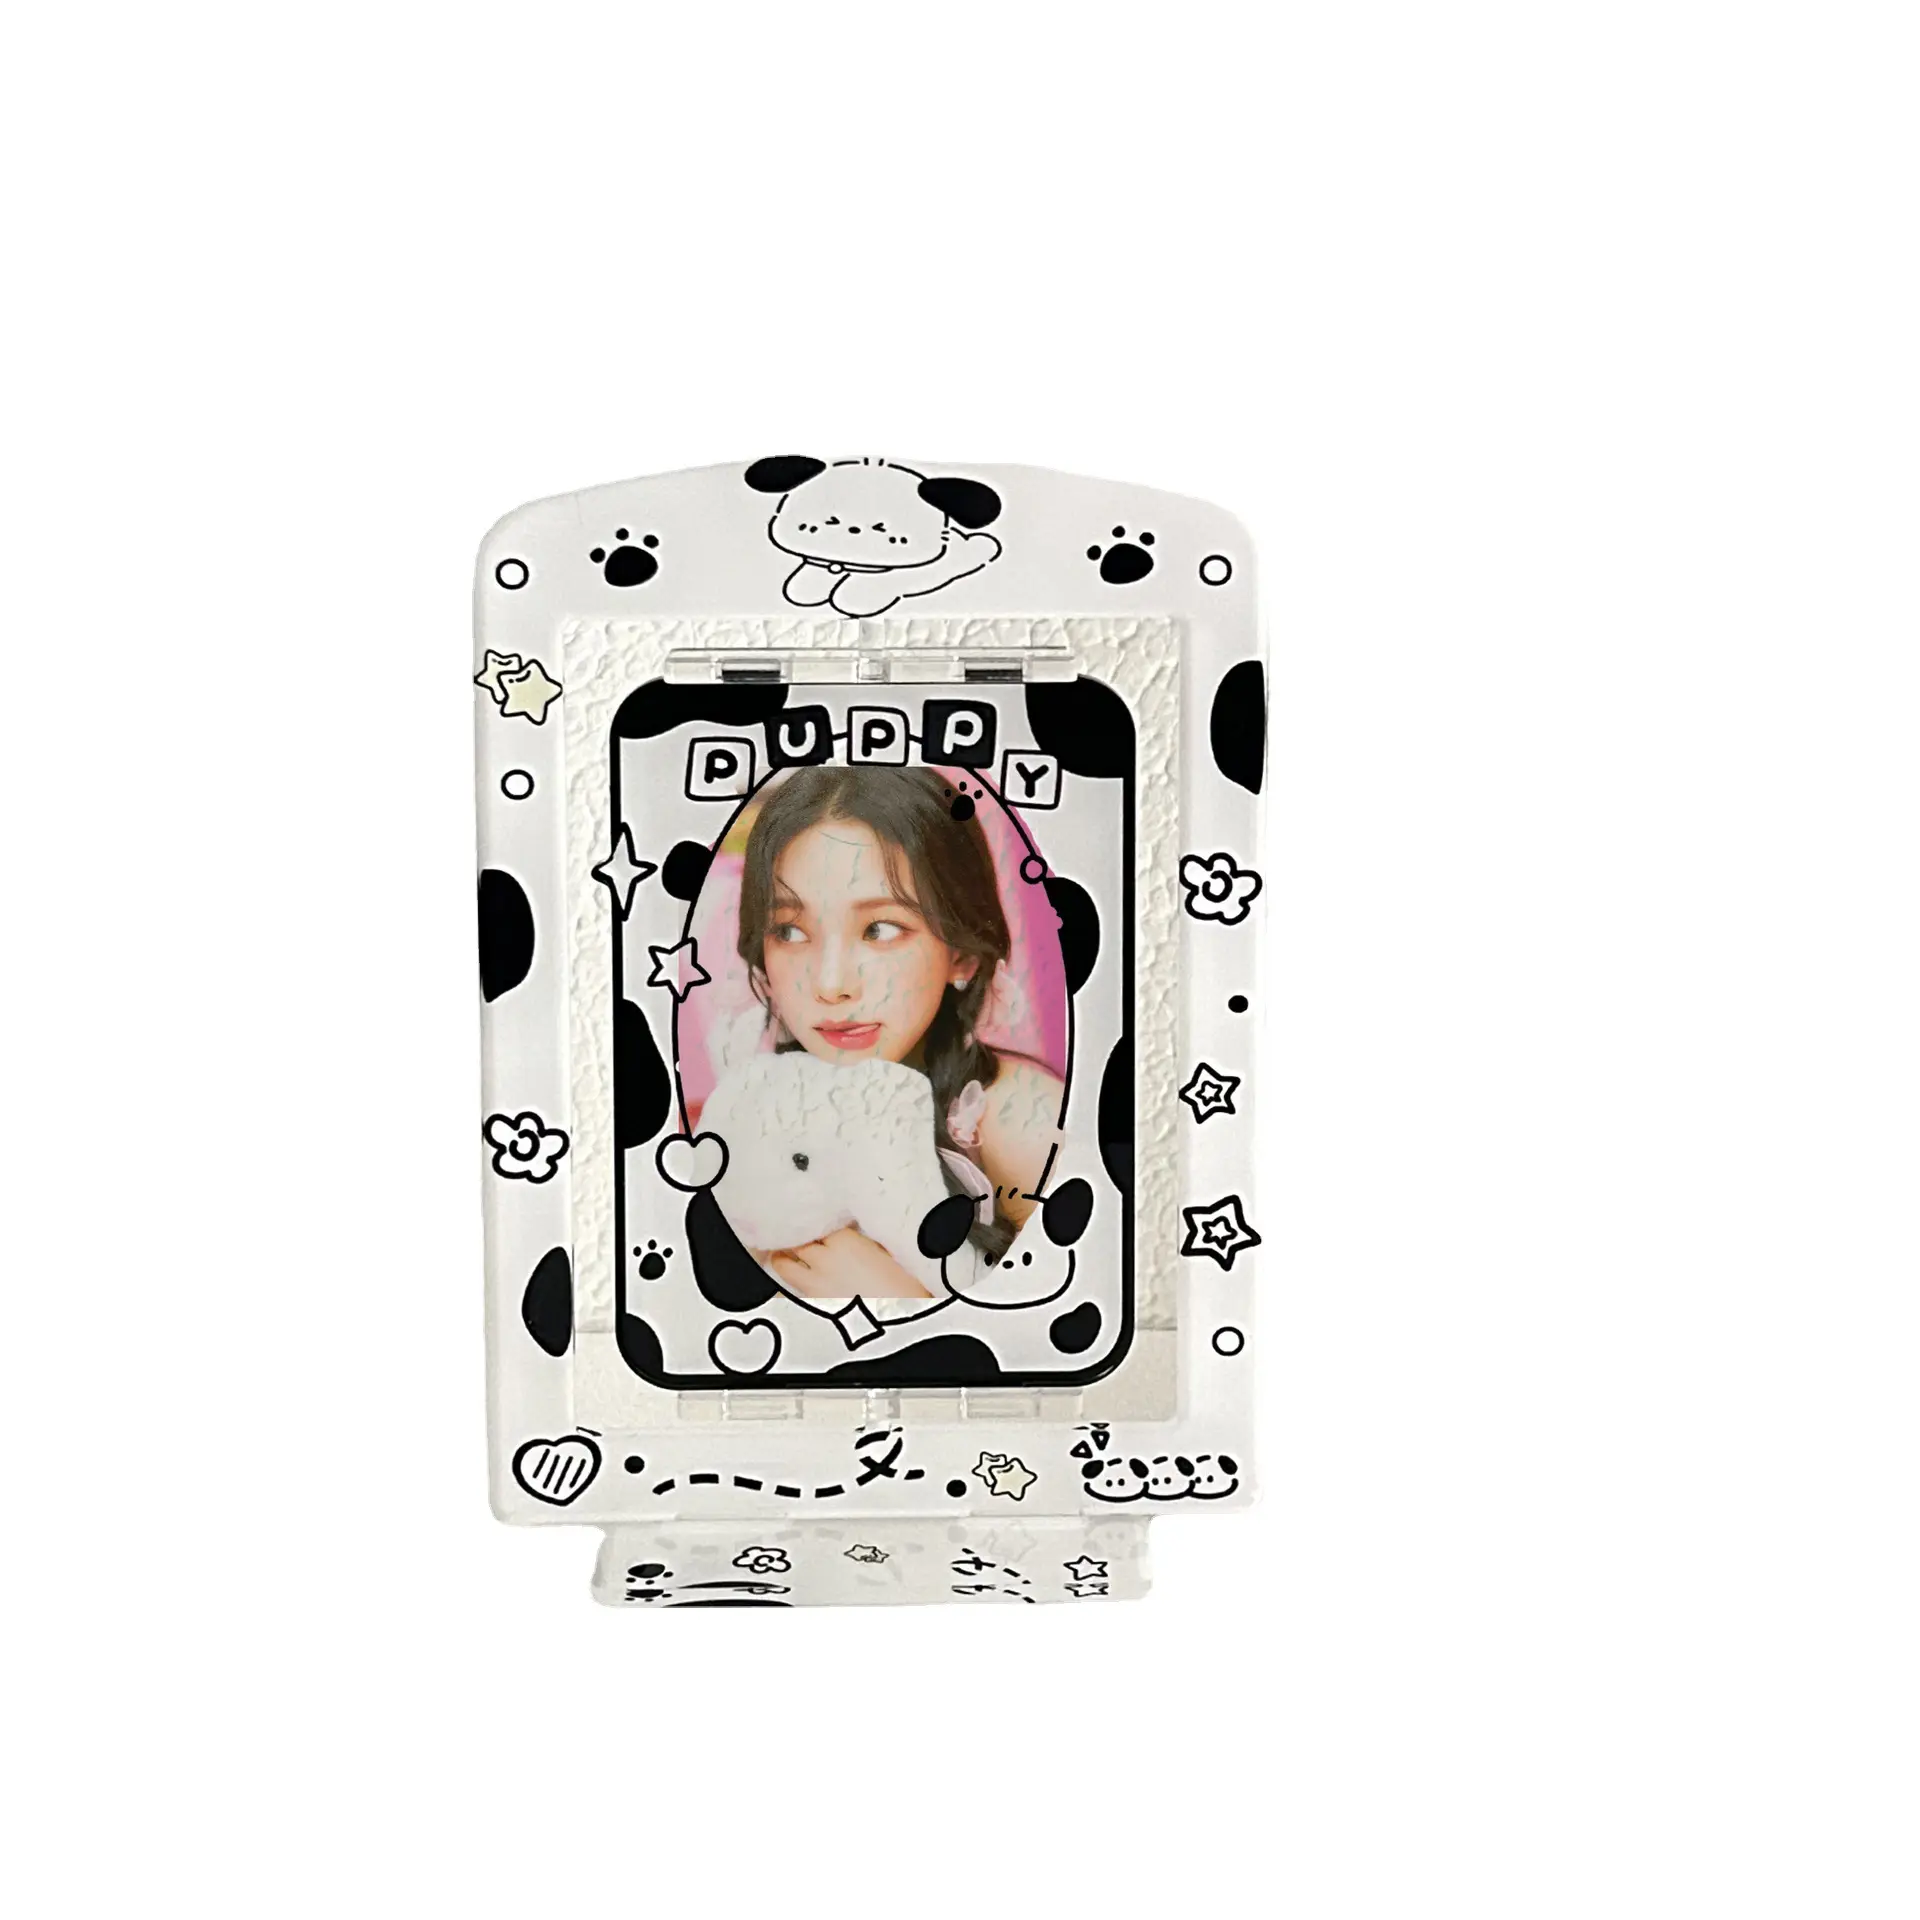 Original Cute Acrylic Kpop Photocard Holder Display Stand Photo Frame